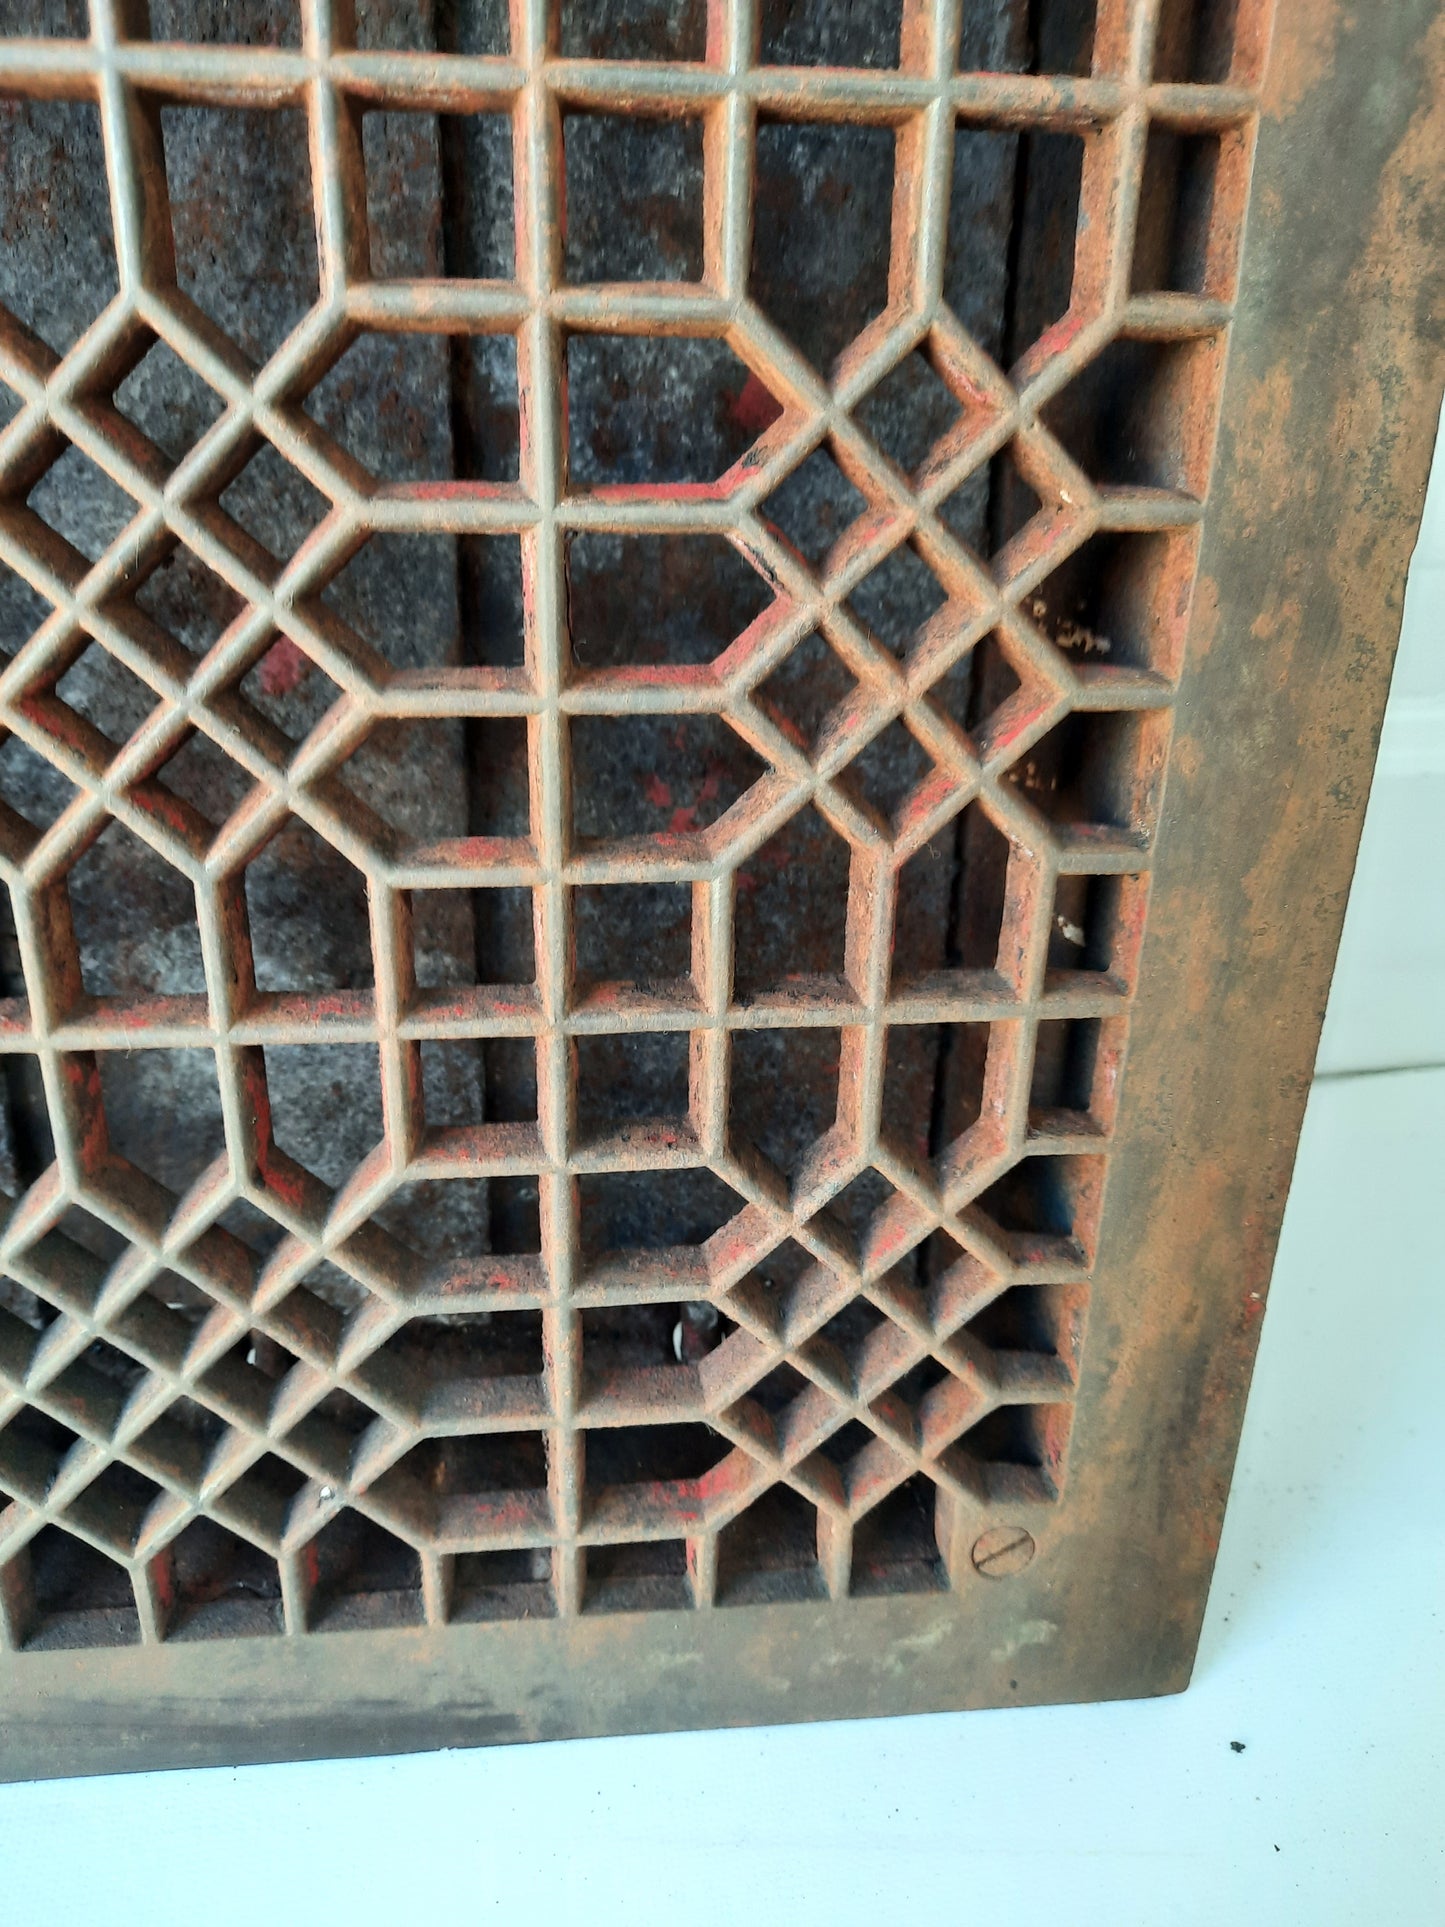 12 x 14 Antique Vent Cover Iron Register Cover, Lattice Pattern Ornate Grate 011106